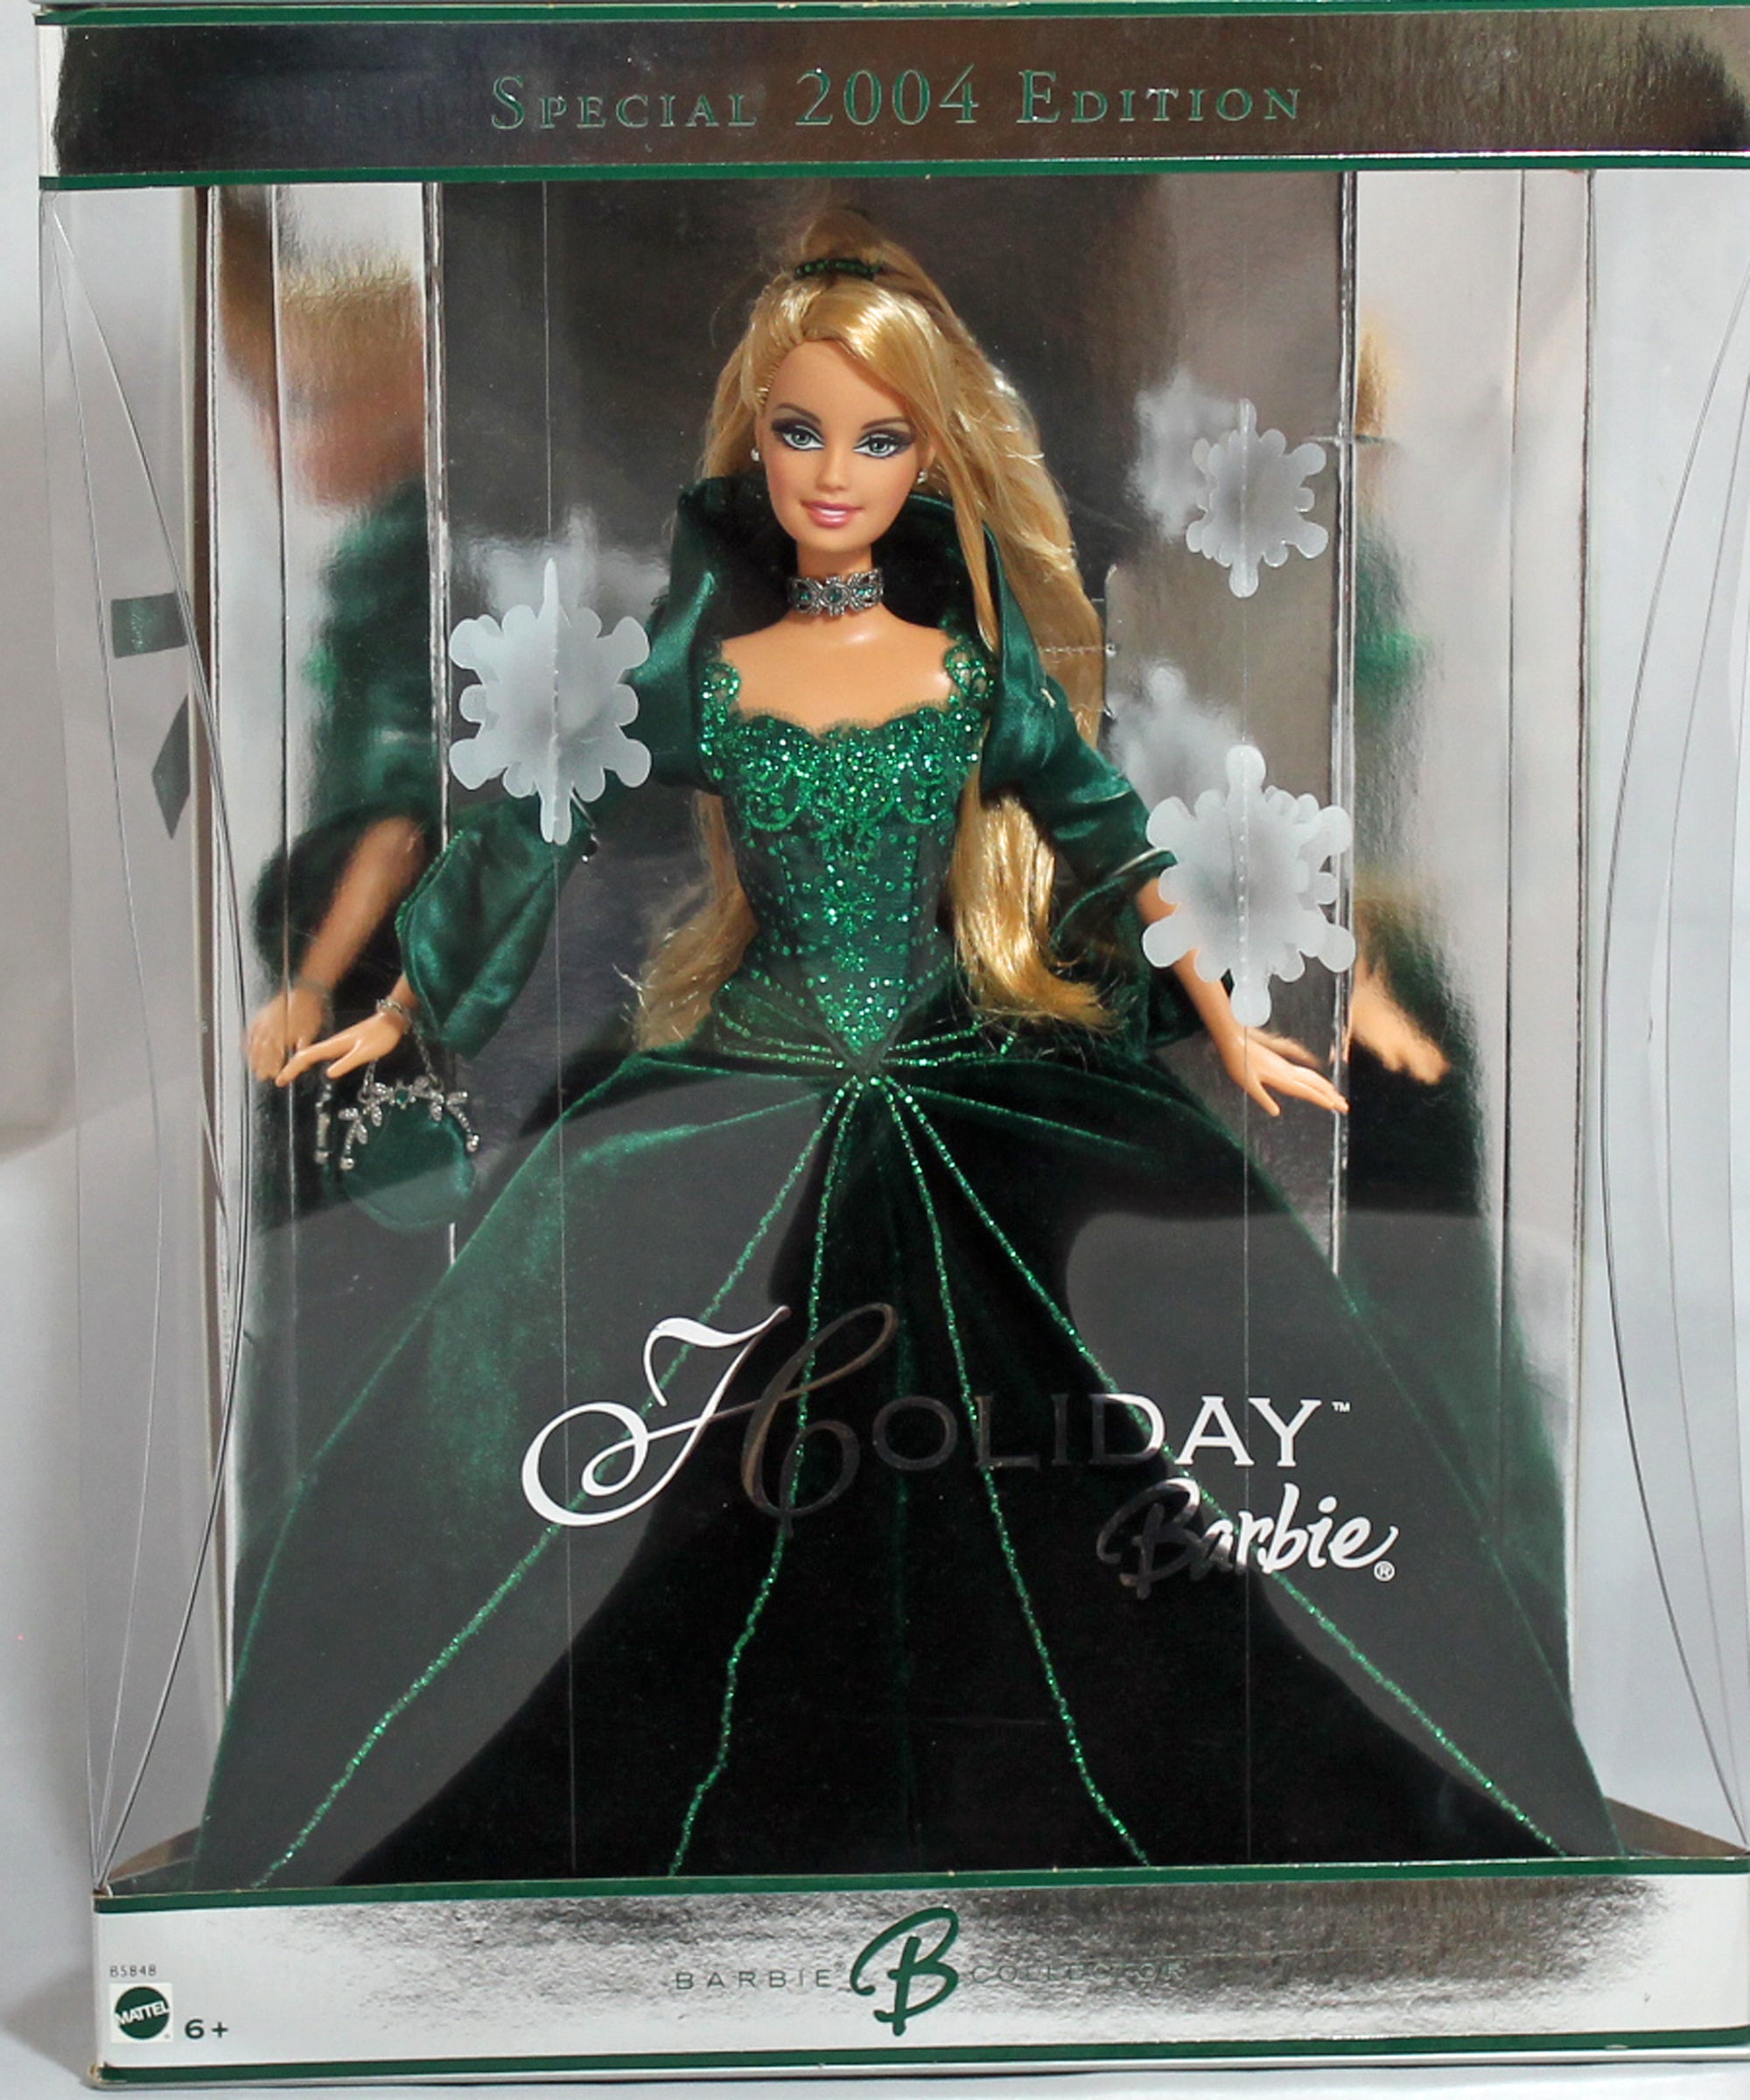 2004 Holiday Barbie (B5848) - Green Dress